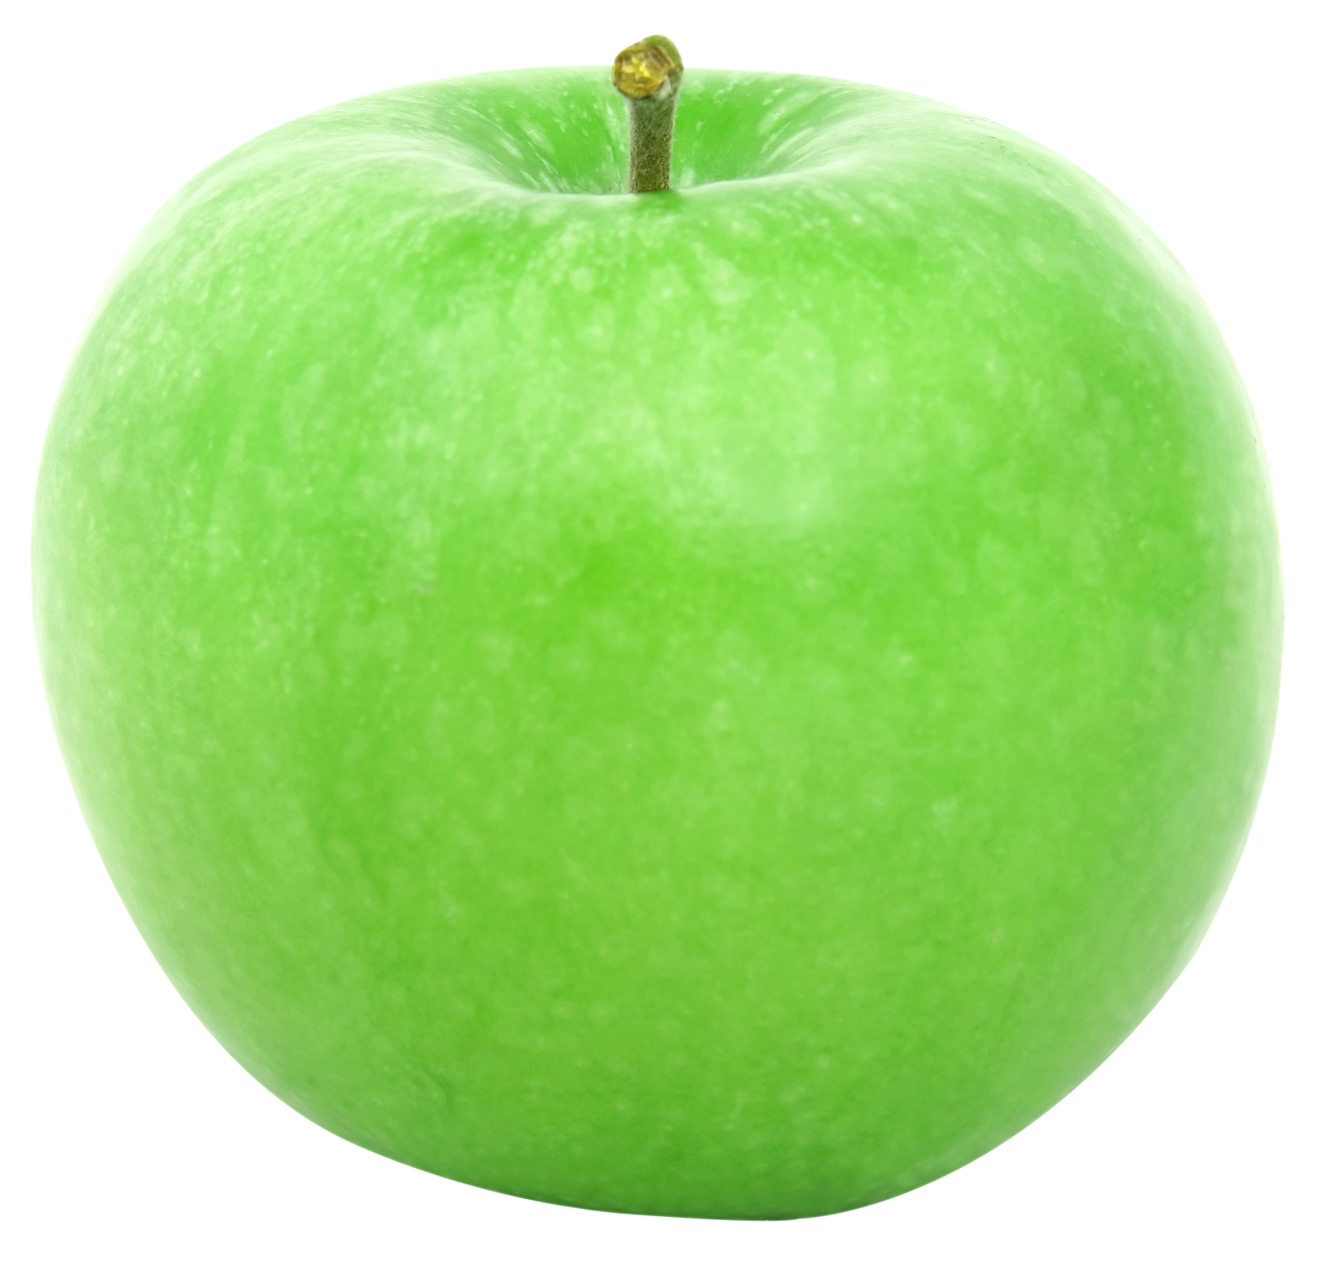 green apple's